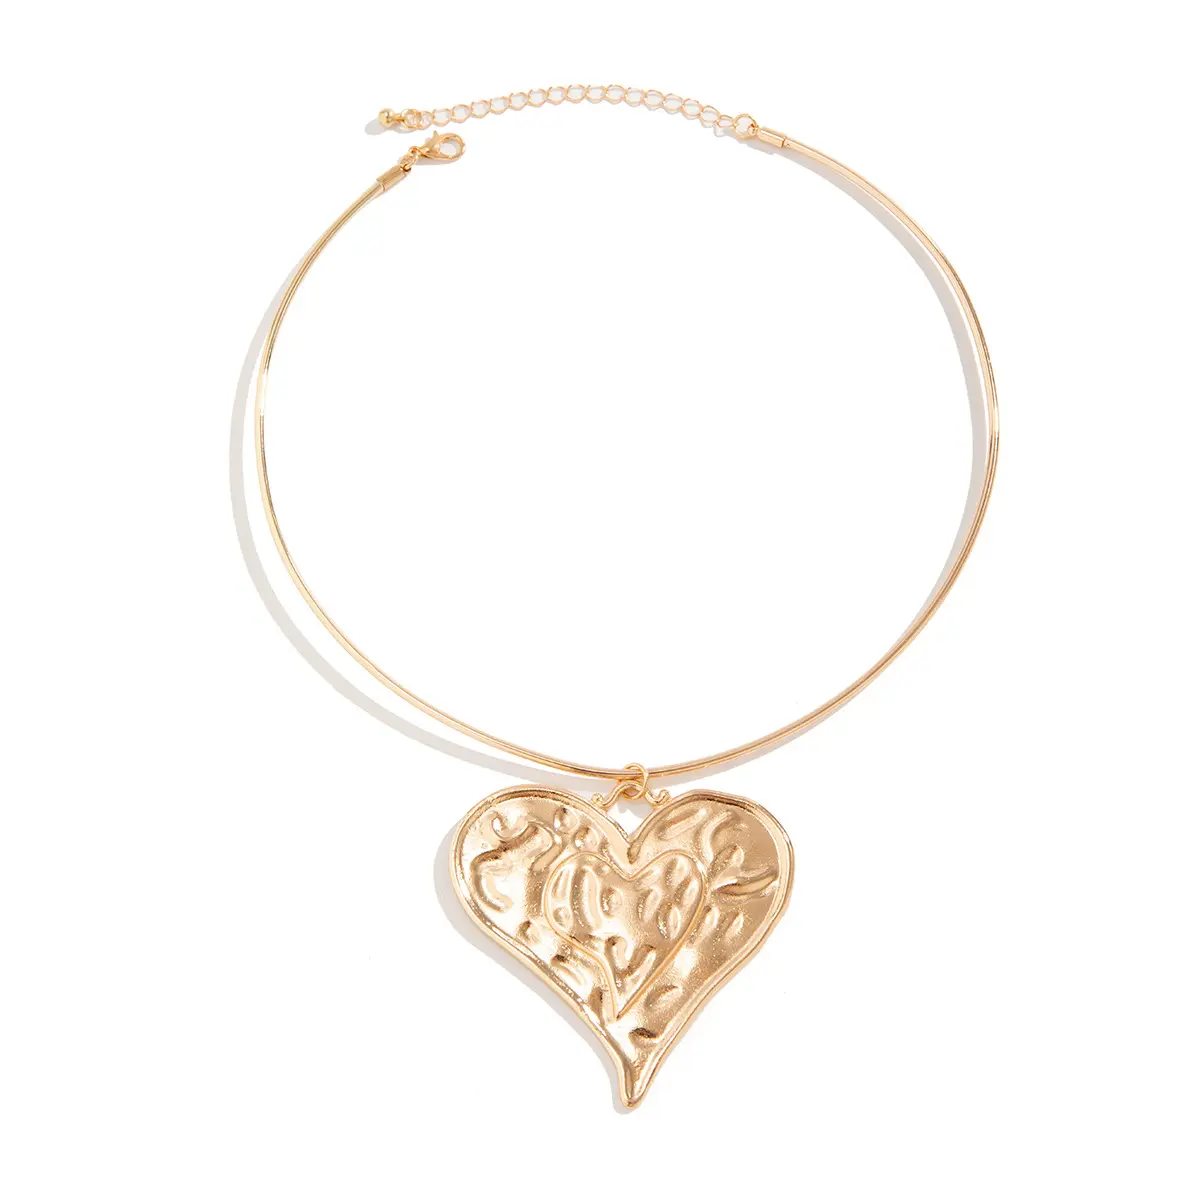 New Fashion Jewelry Adjustable Big Heart Choker Necklace Metal Heart Pendant Choker Necklace For Lady